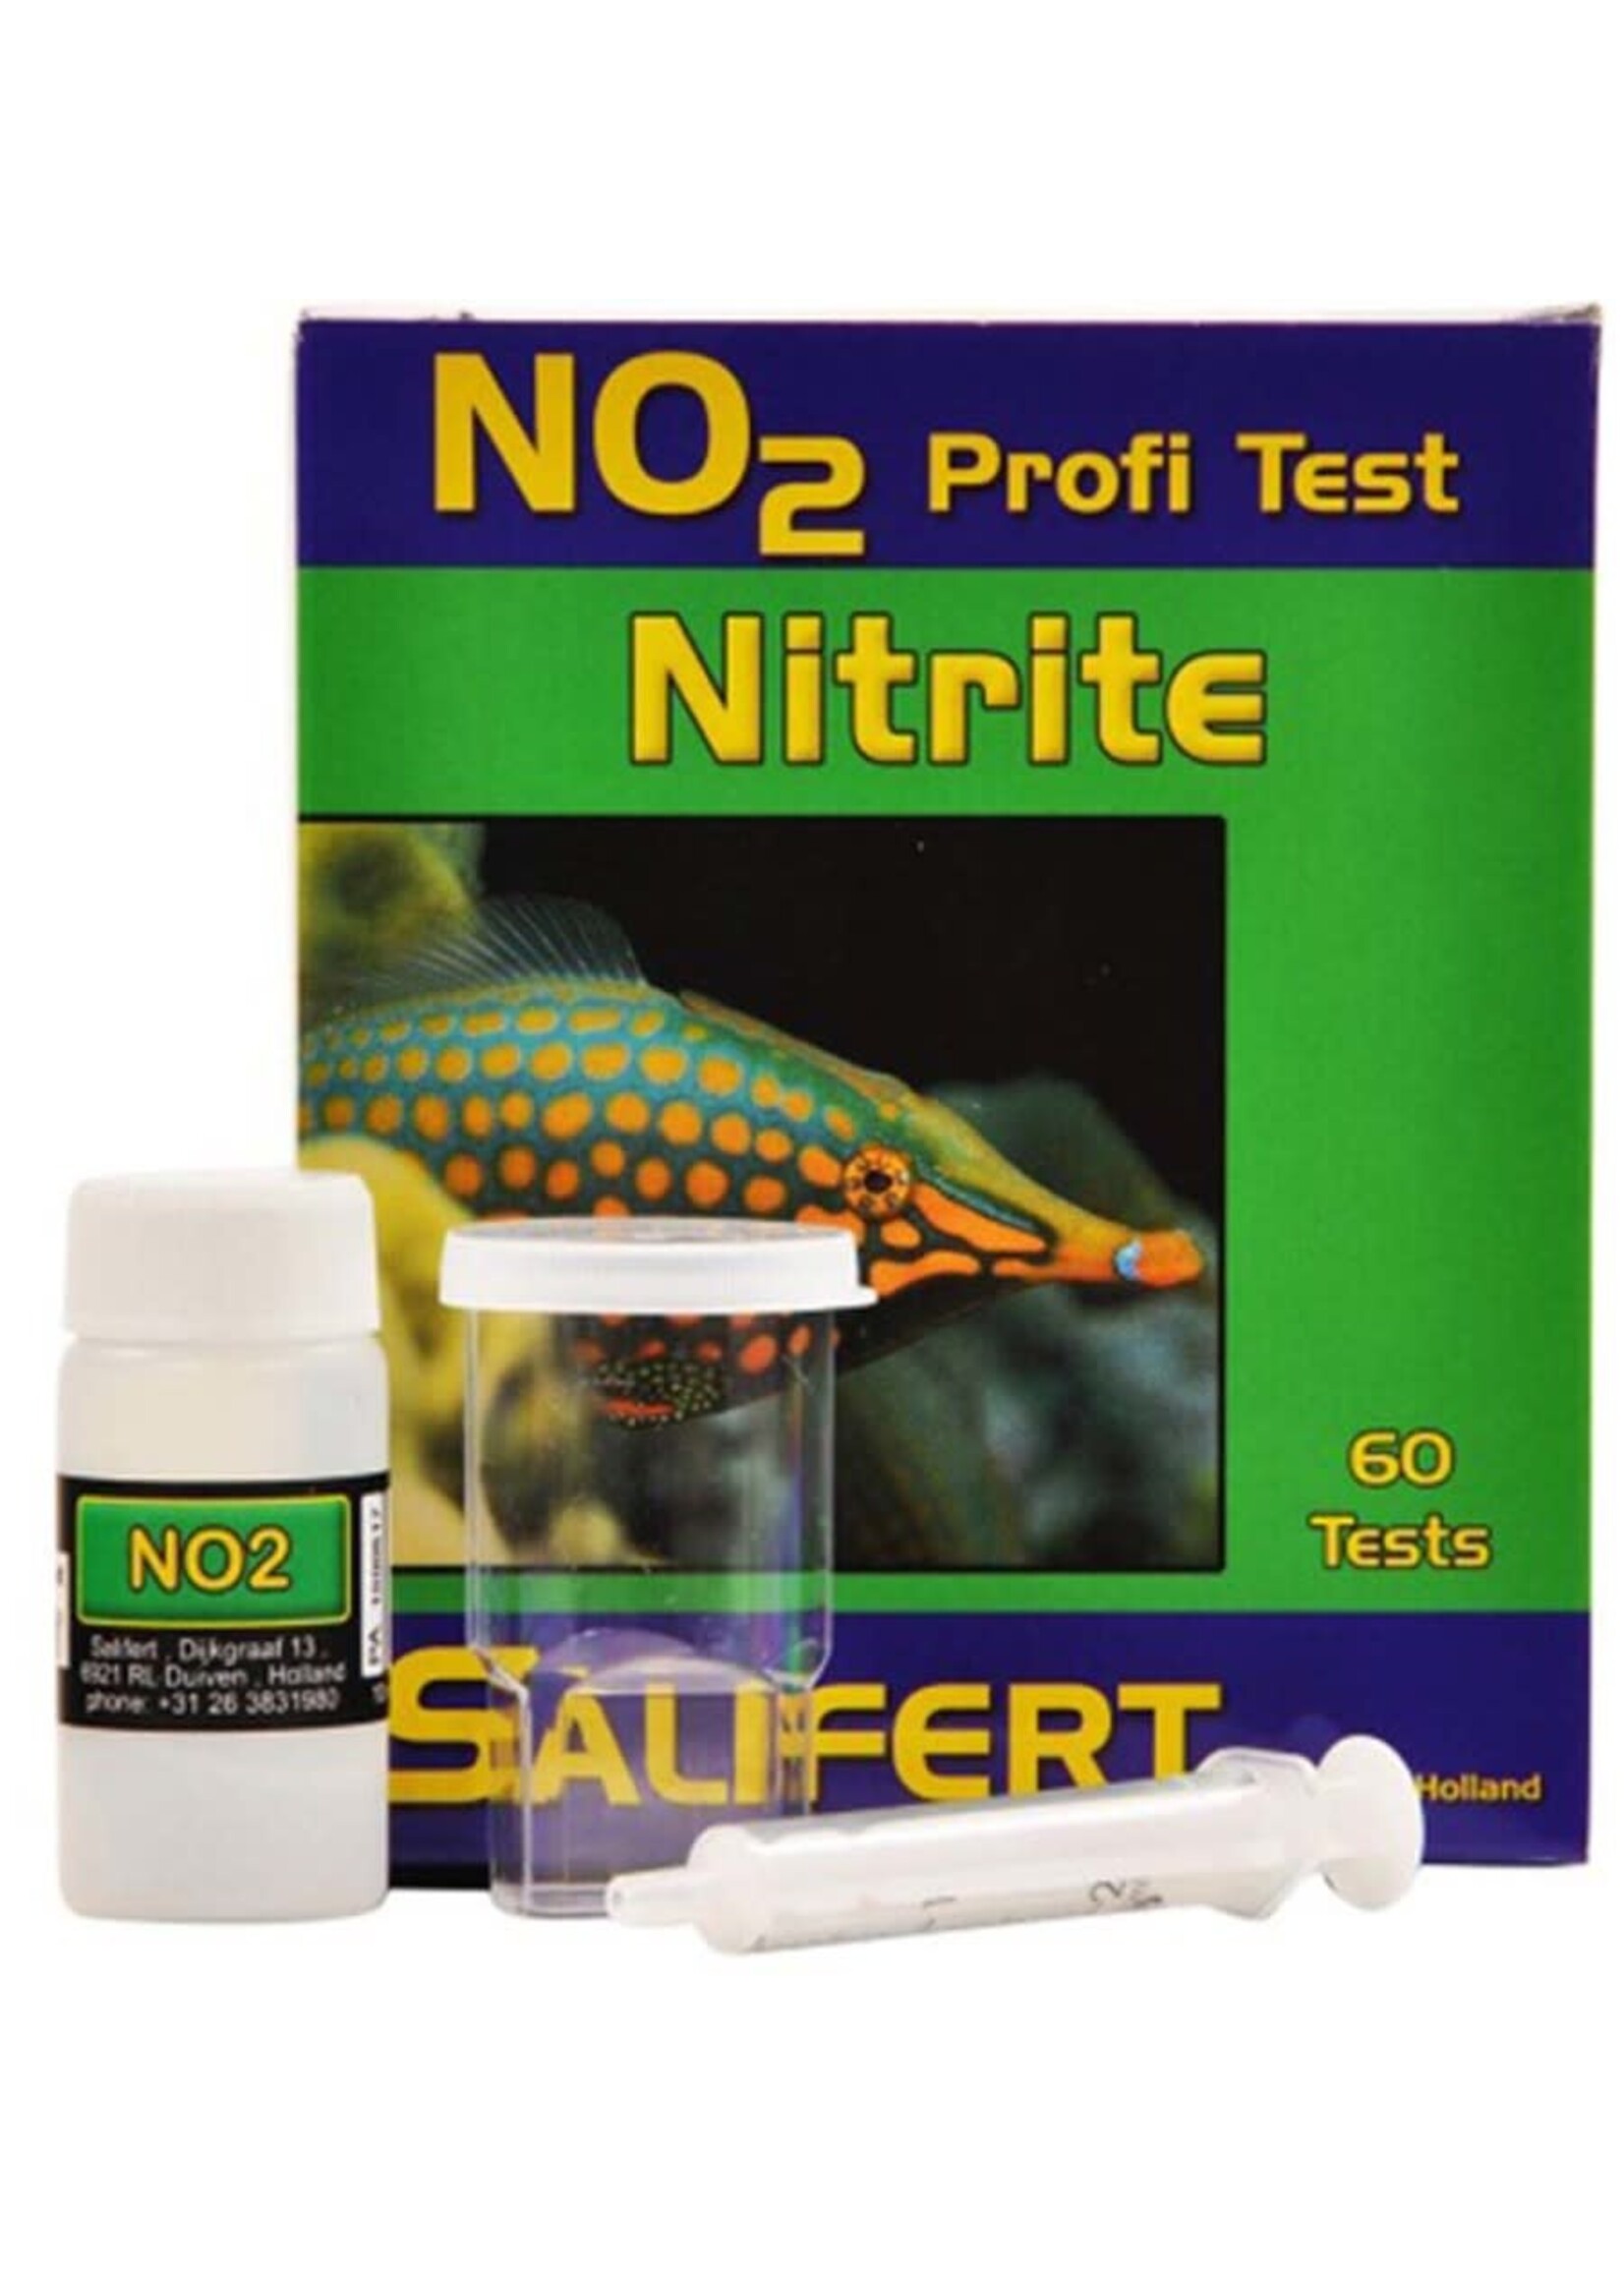 Salifert SALIFERT TEST KIT NITRITE 60 TEST